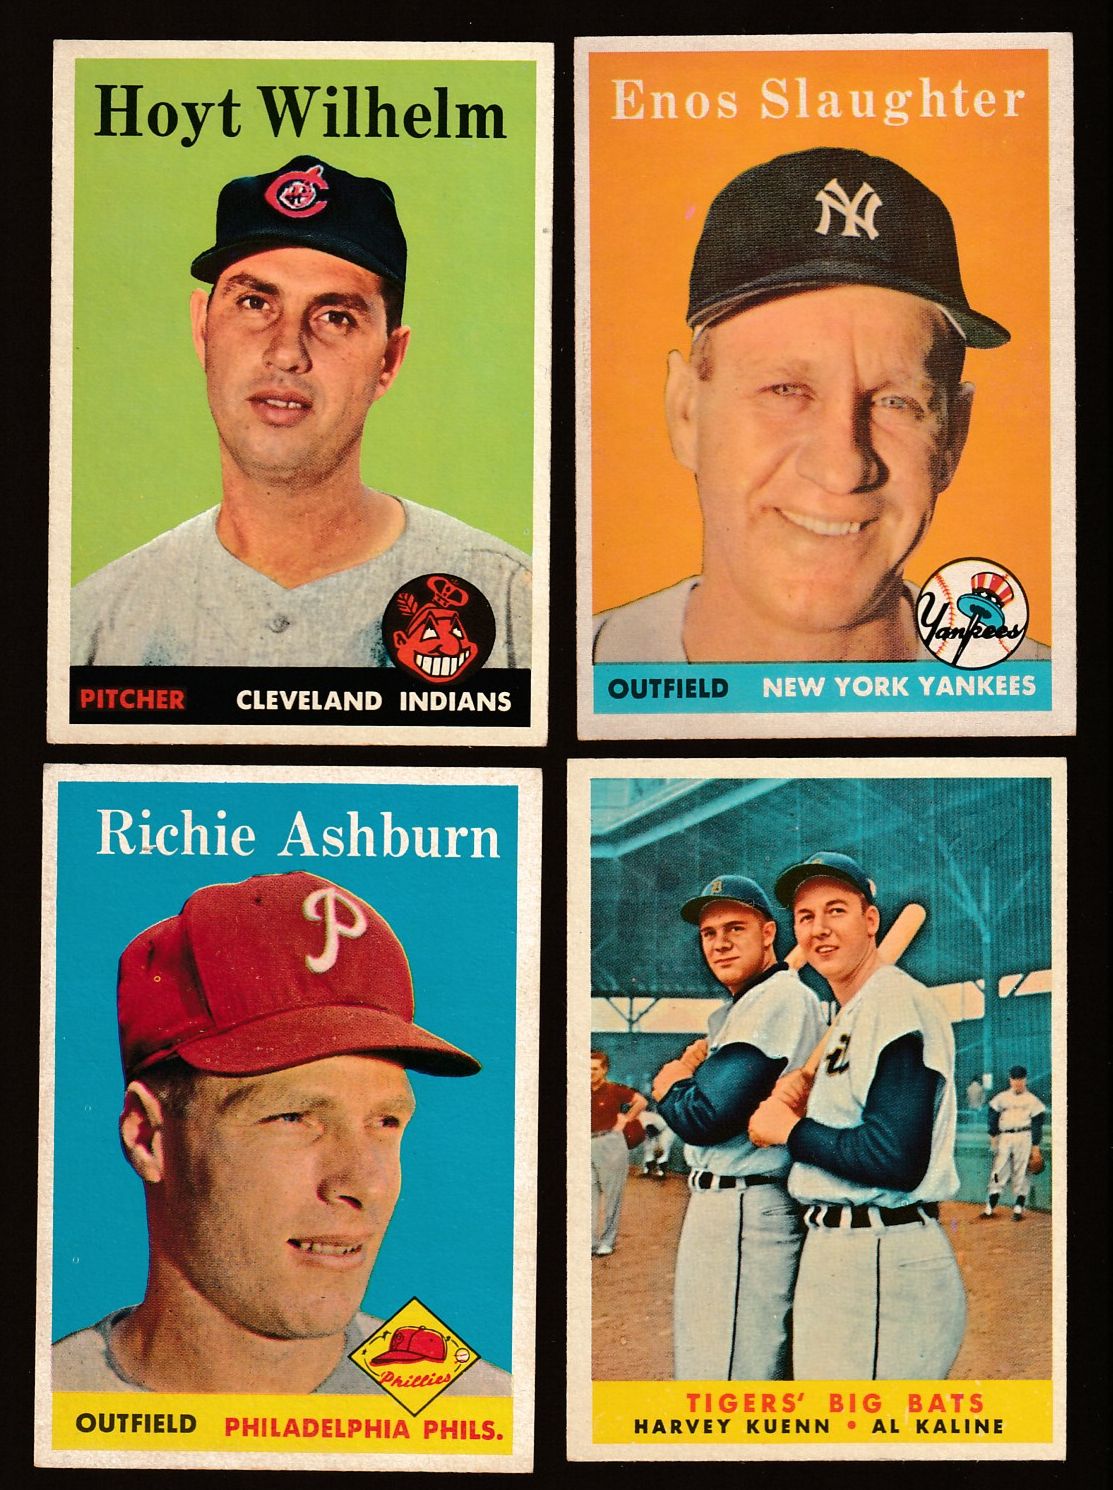 1958 Topps #324 Hoyt Wilhelm [#] (Indians) Baseball cards value